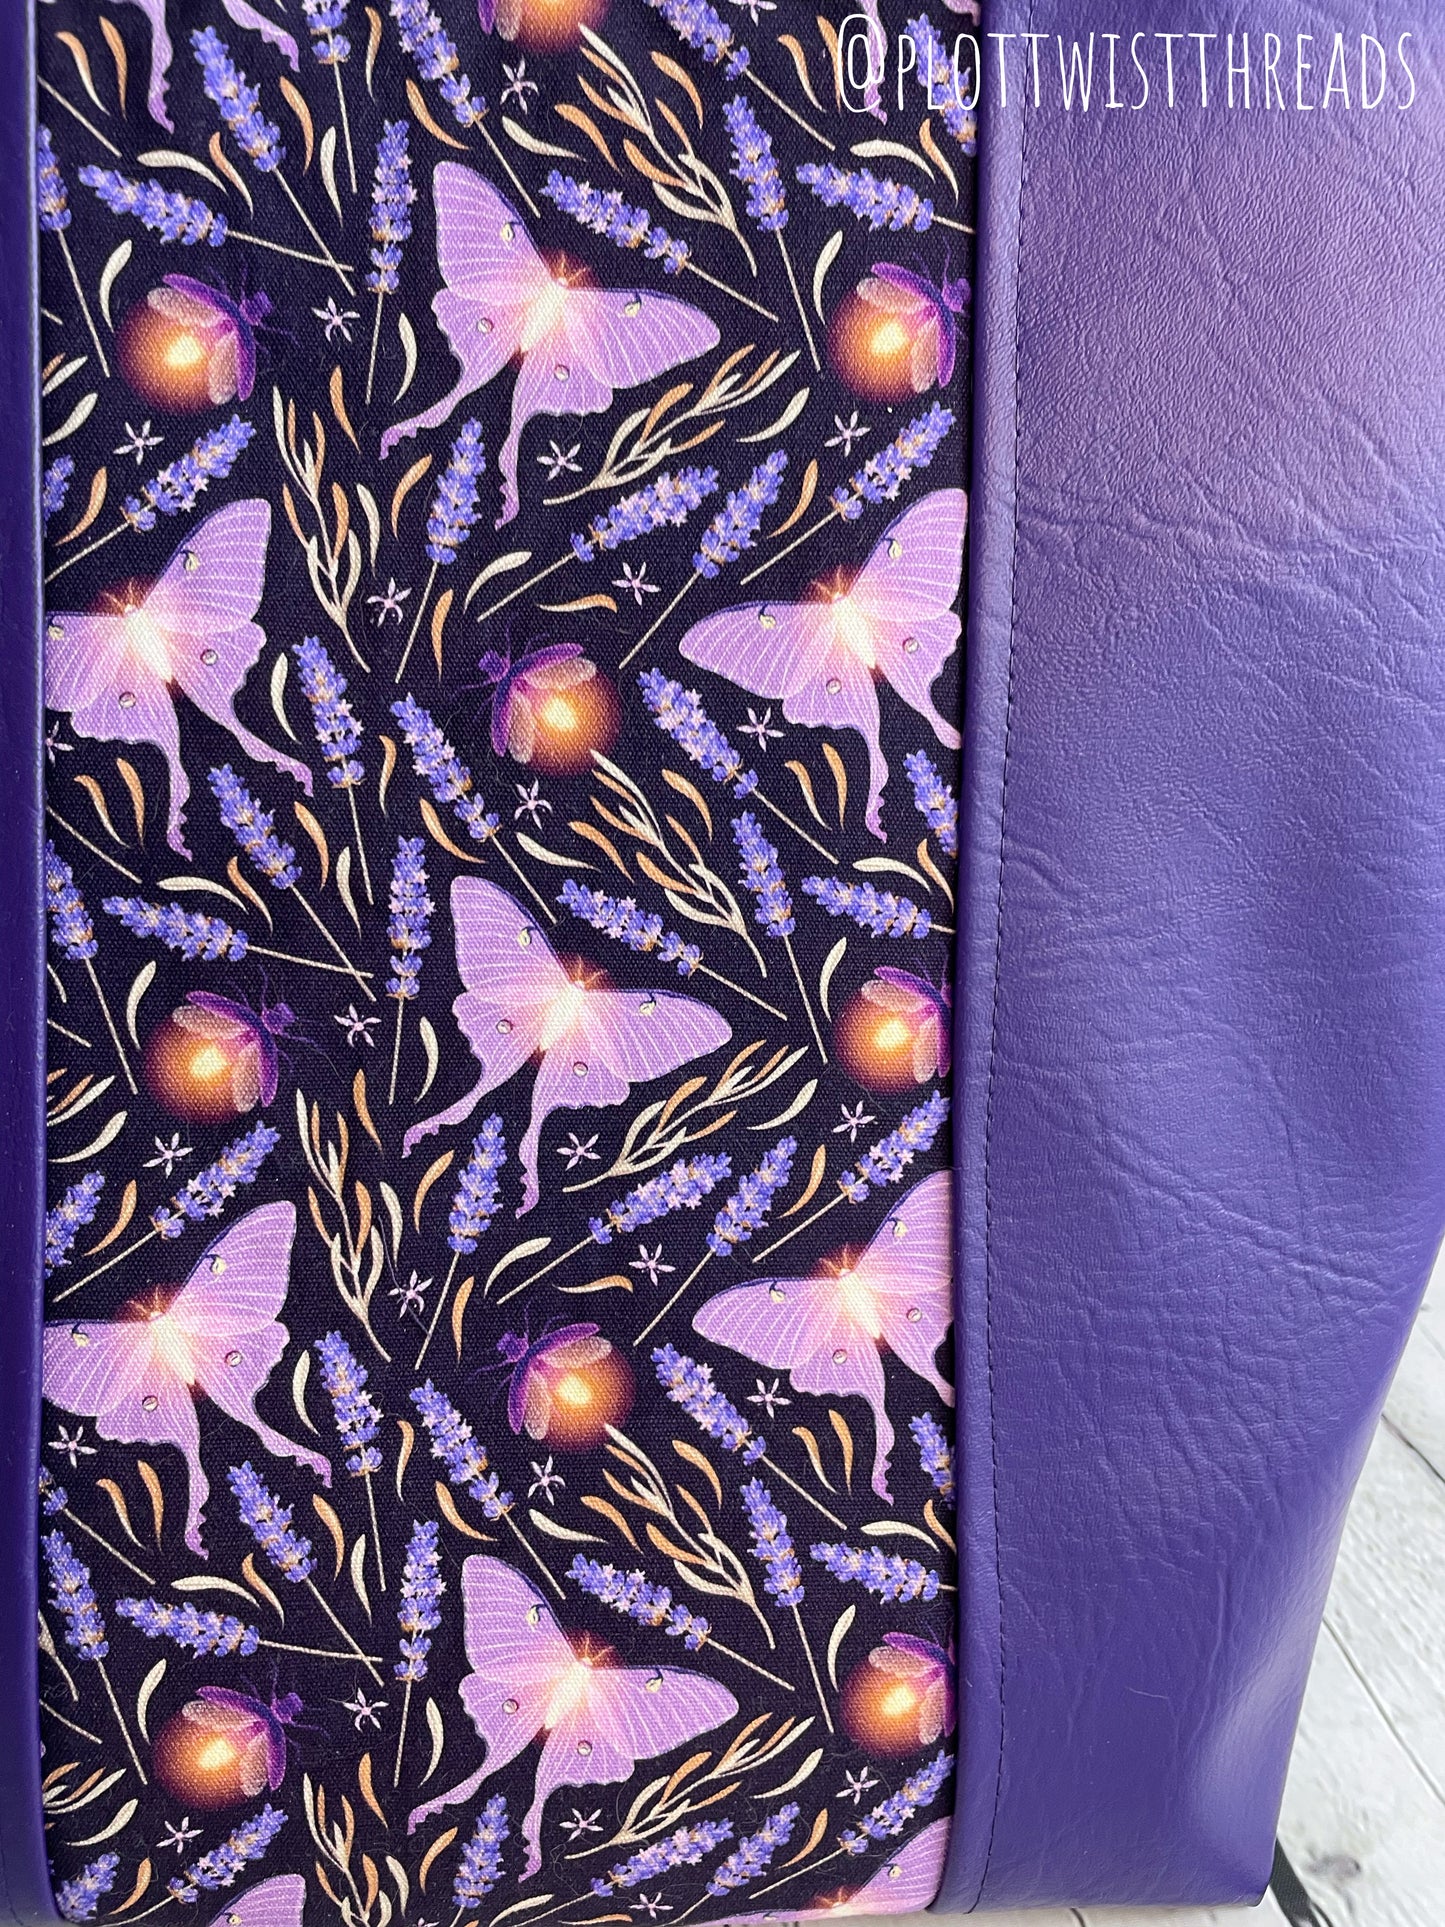 Canvas and Vinyl Tote - Shoulder Bag - Purple Moths & Lavender